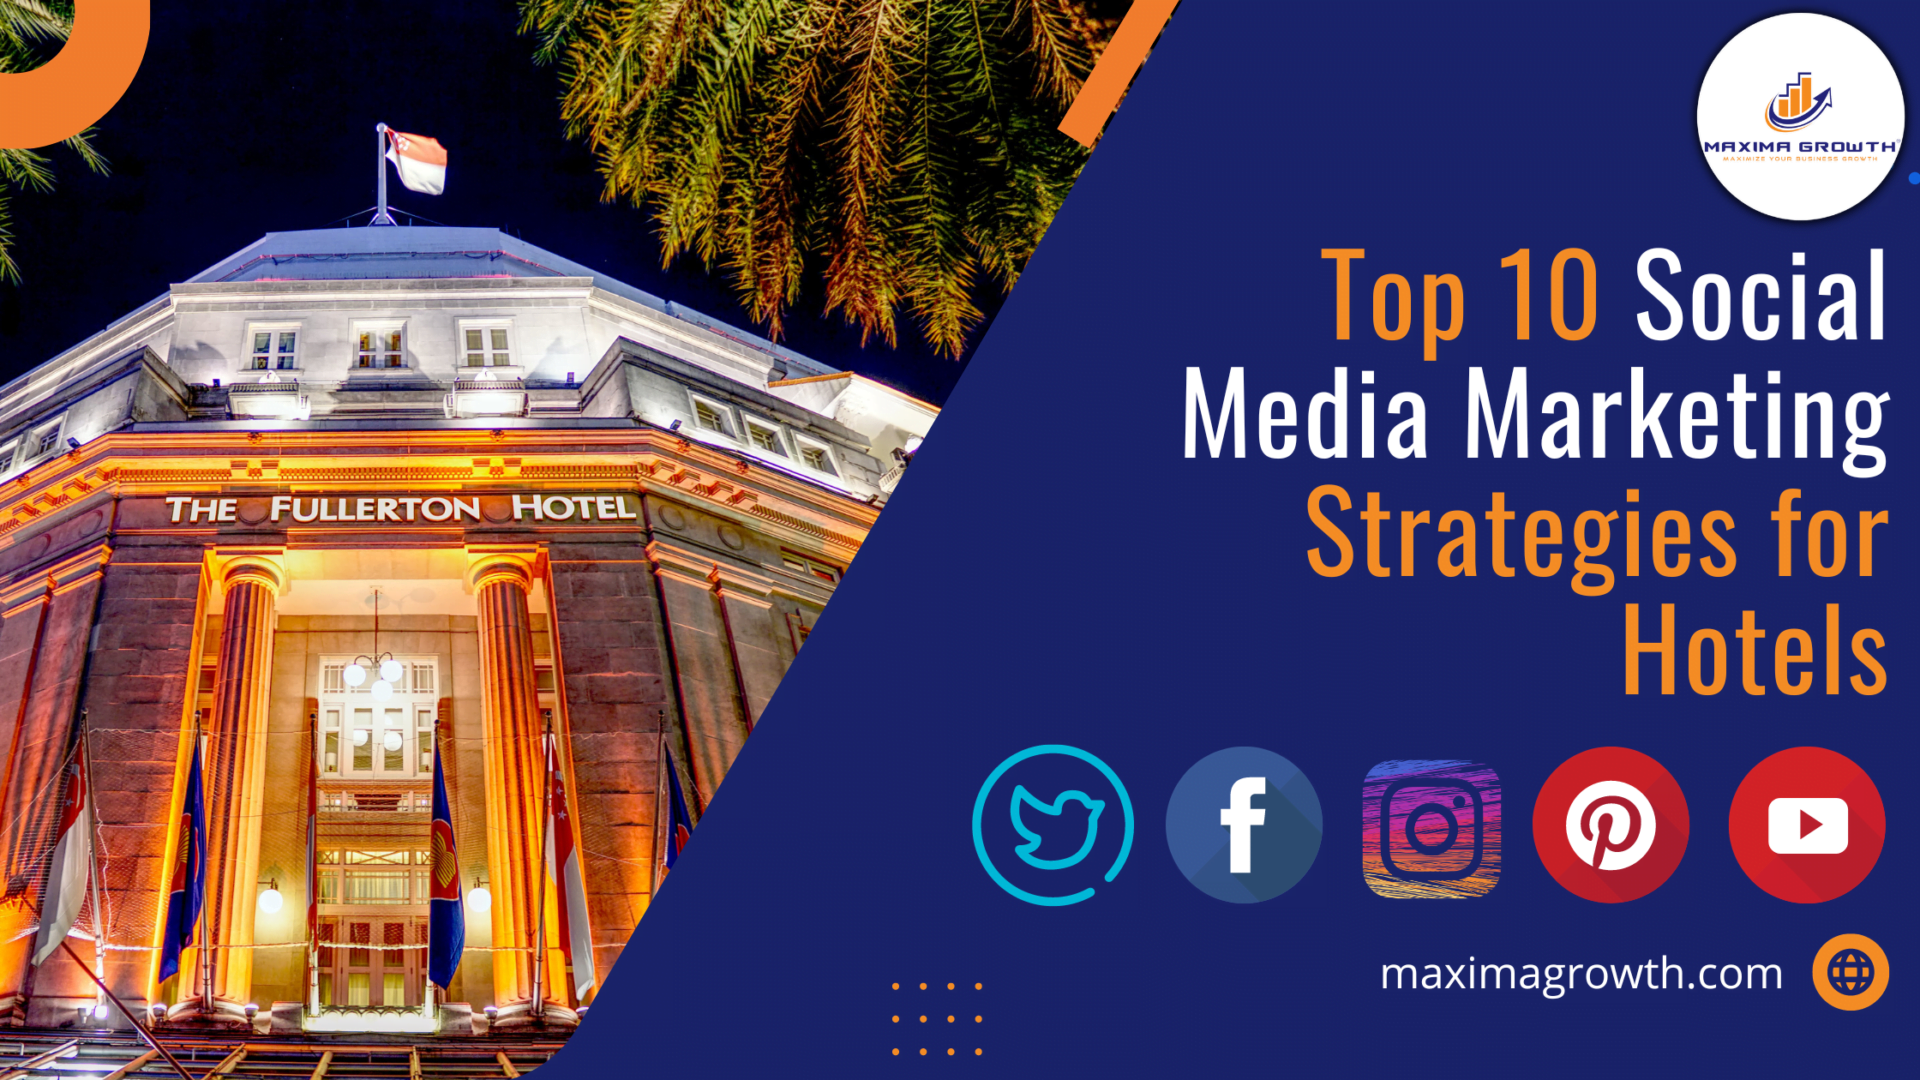 Top 10 Social Media Marketing Strategies for Hotels